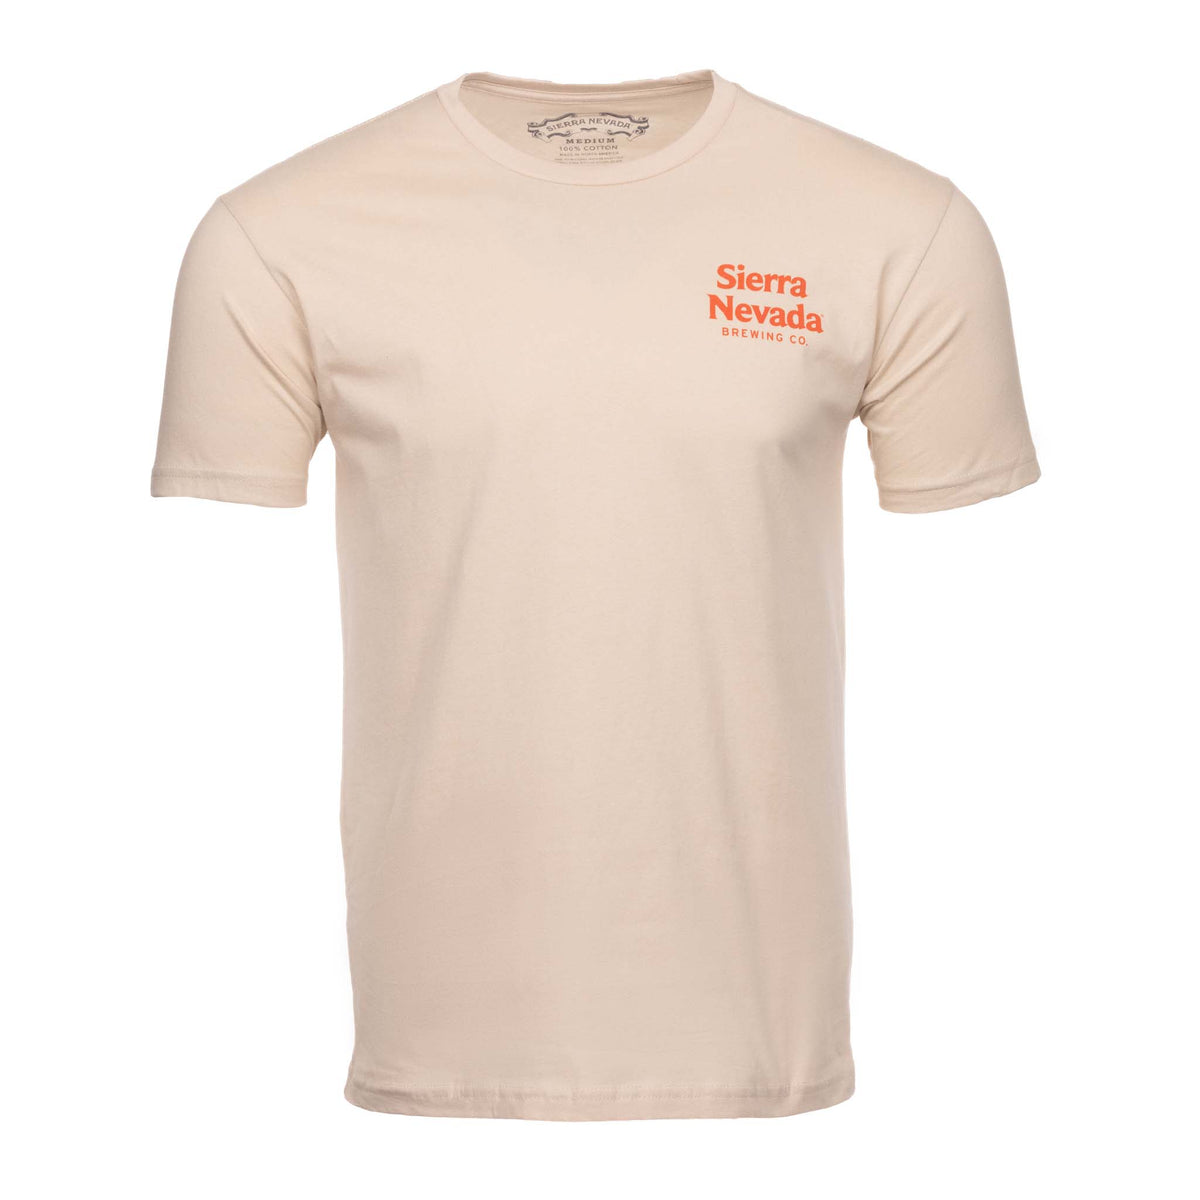 Sierra Nevada Trail Cream T-Shirt - Front view